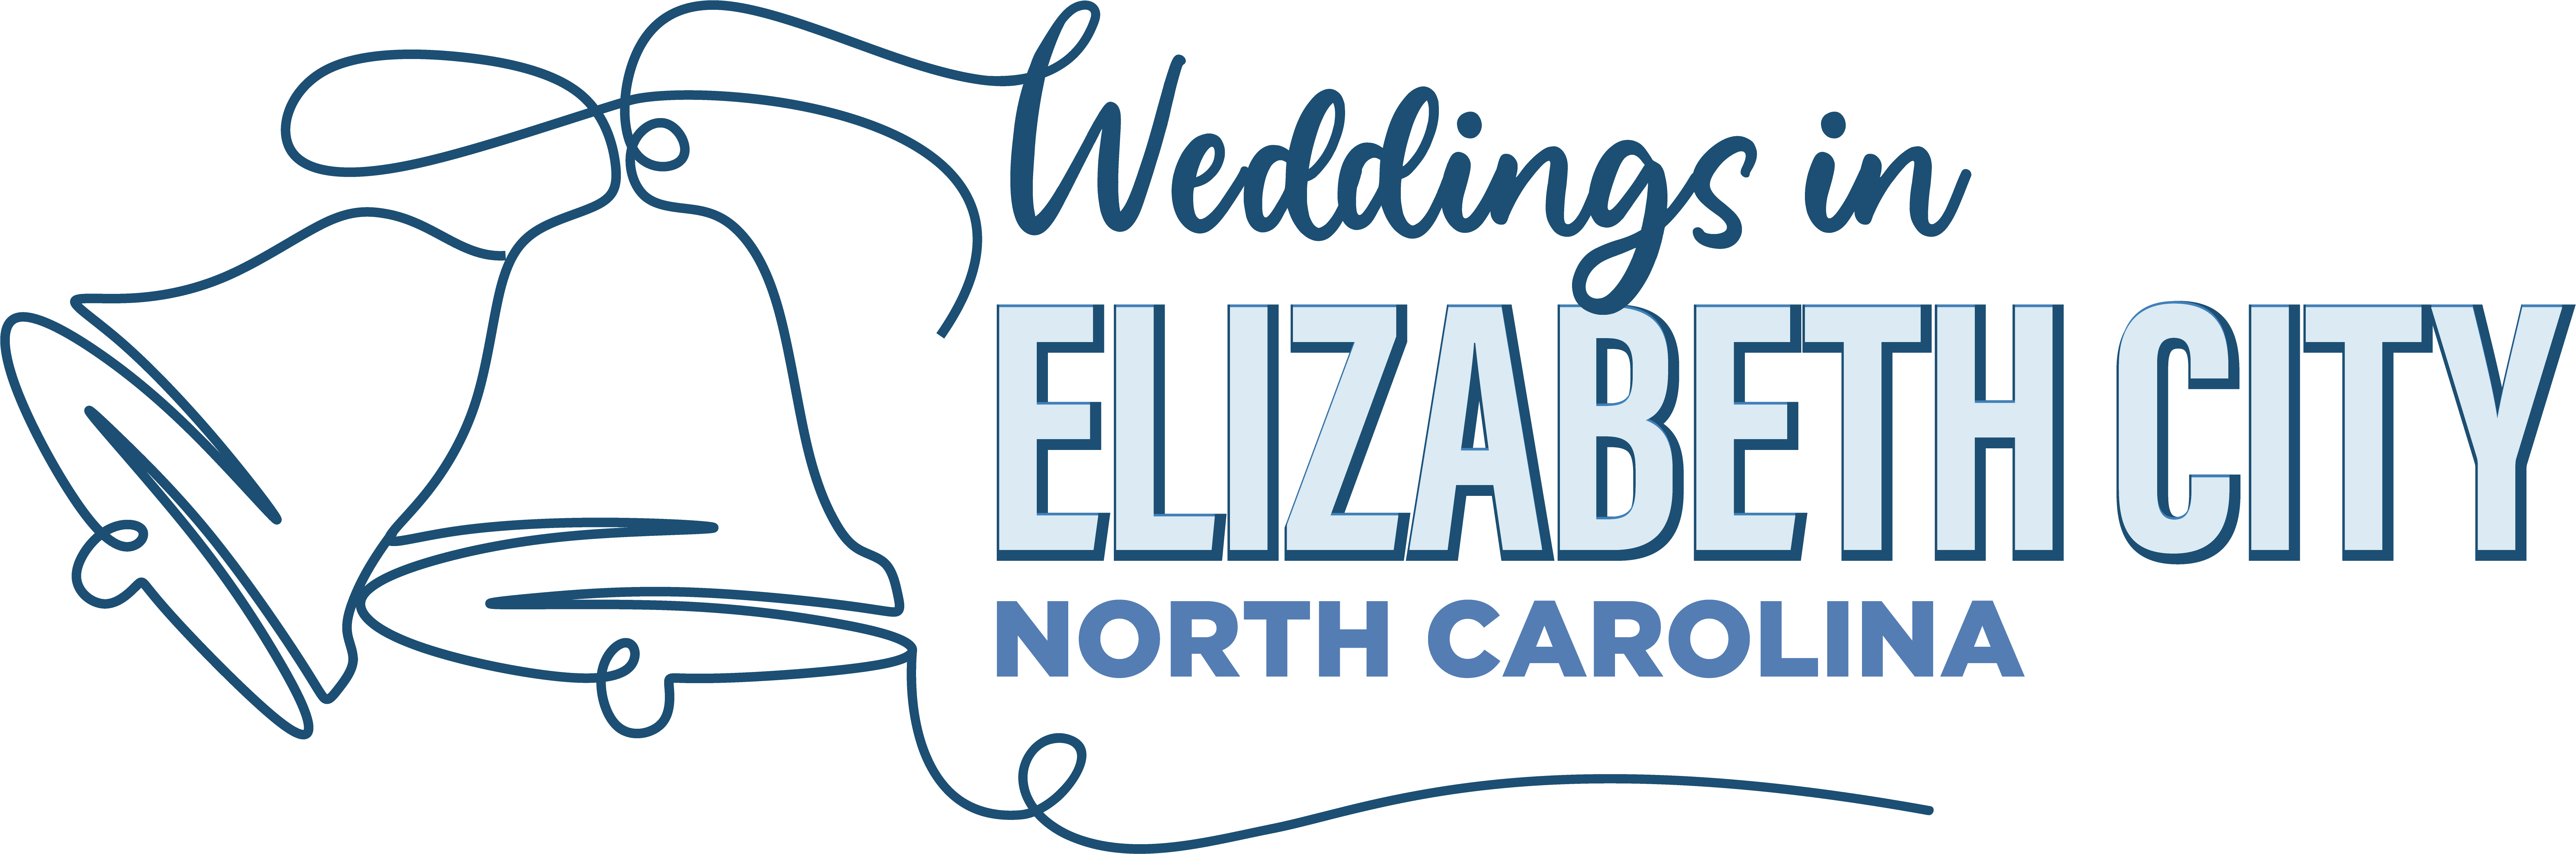 Weddings in Elizabeth City, North Carolina